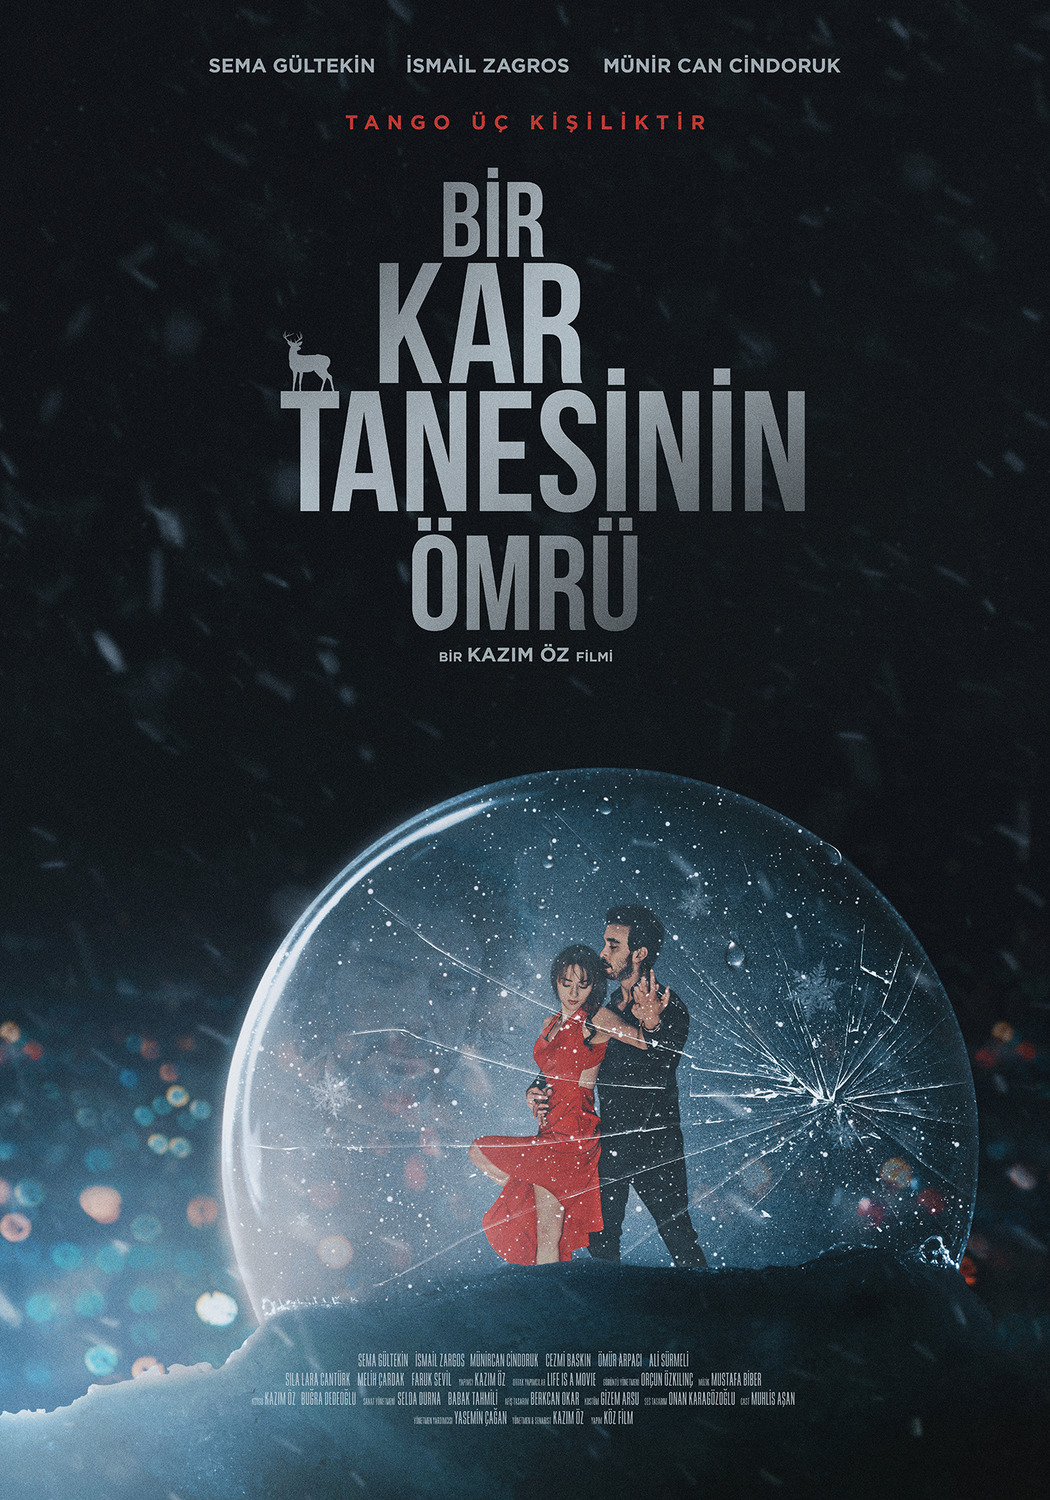 Extra Large Movie Poster Image for Bir Kar Tanesinin Ömrü (#2 of 2)